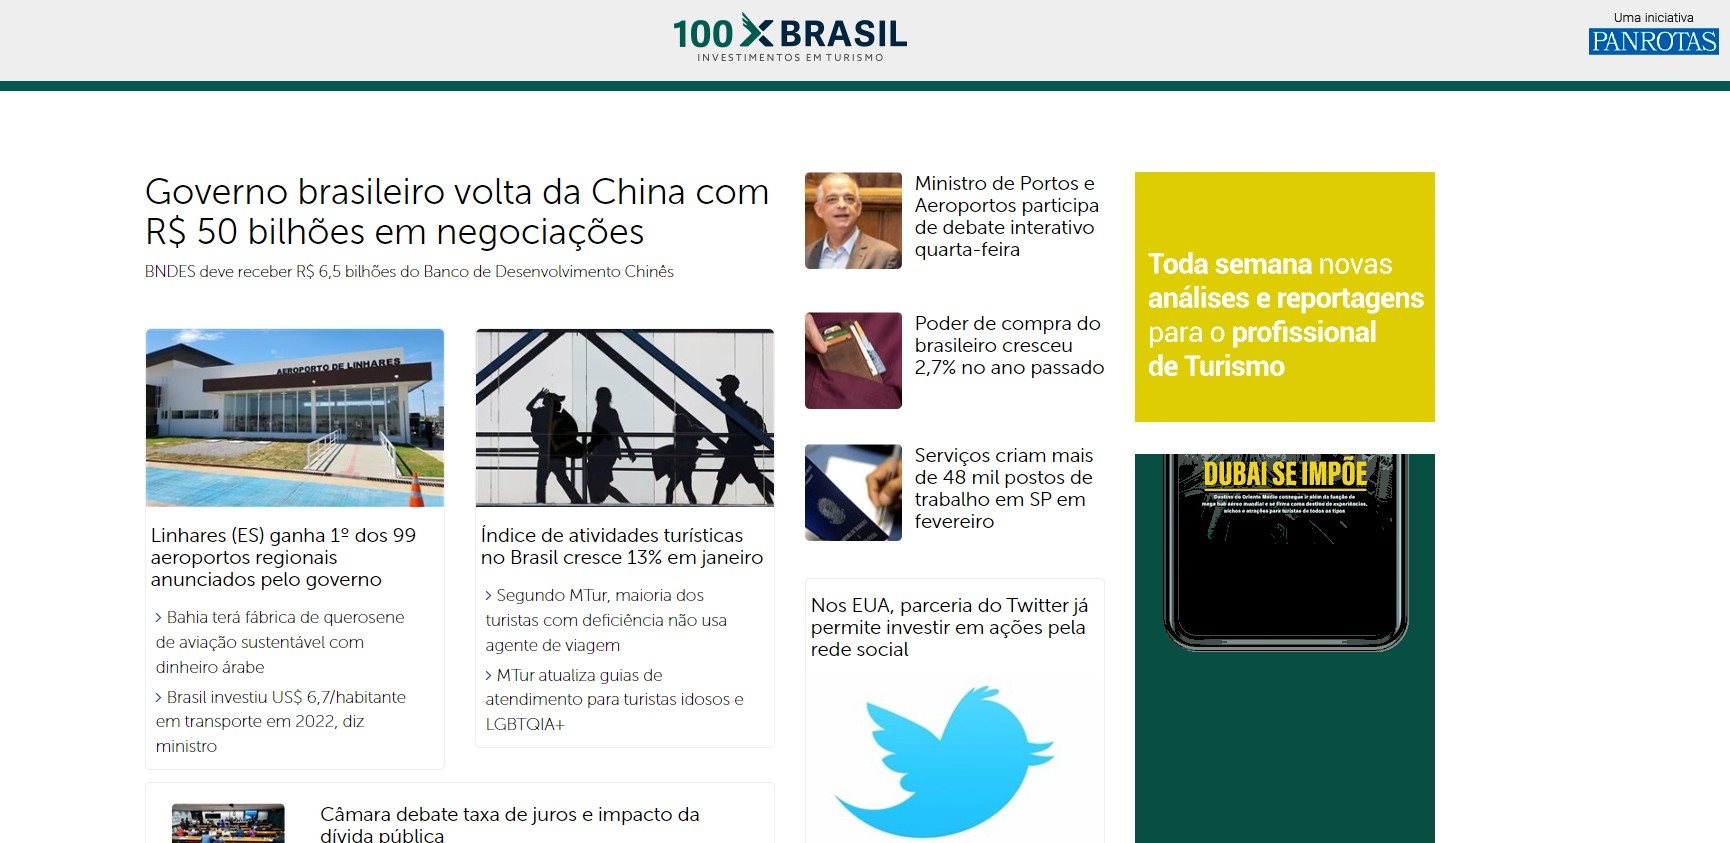 Home page 100xBrasil: www.100xbrasil.com.br